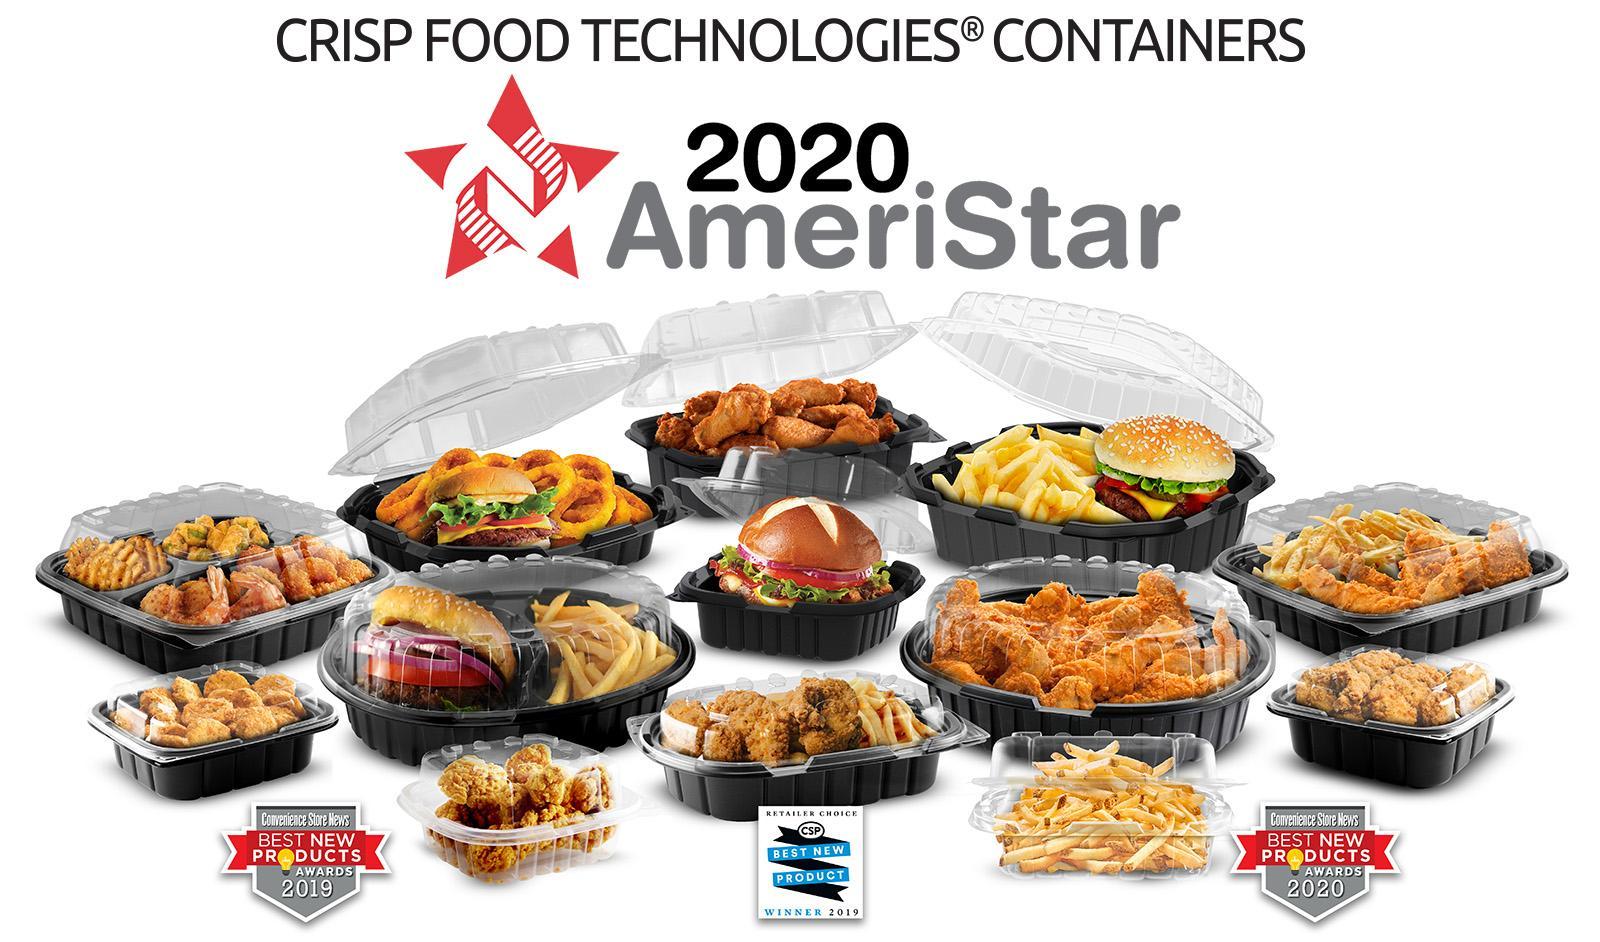 CRISP FOOD TECHNOLOGIES® WINS 2020 AMERISTAR PACKAGING AWARD - Anchor  Packaging